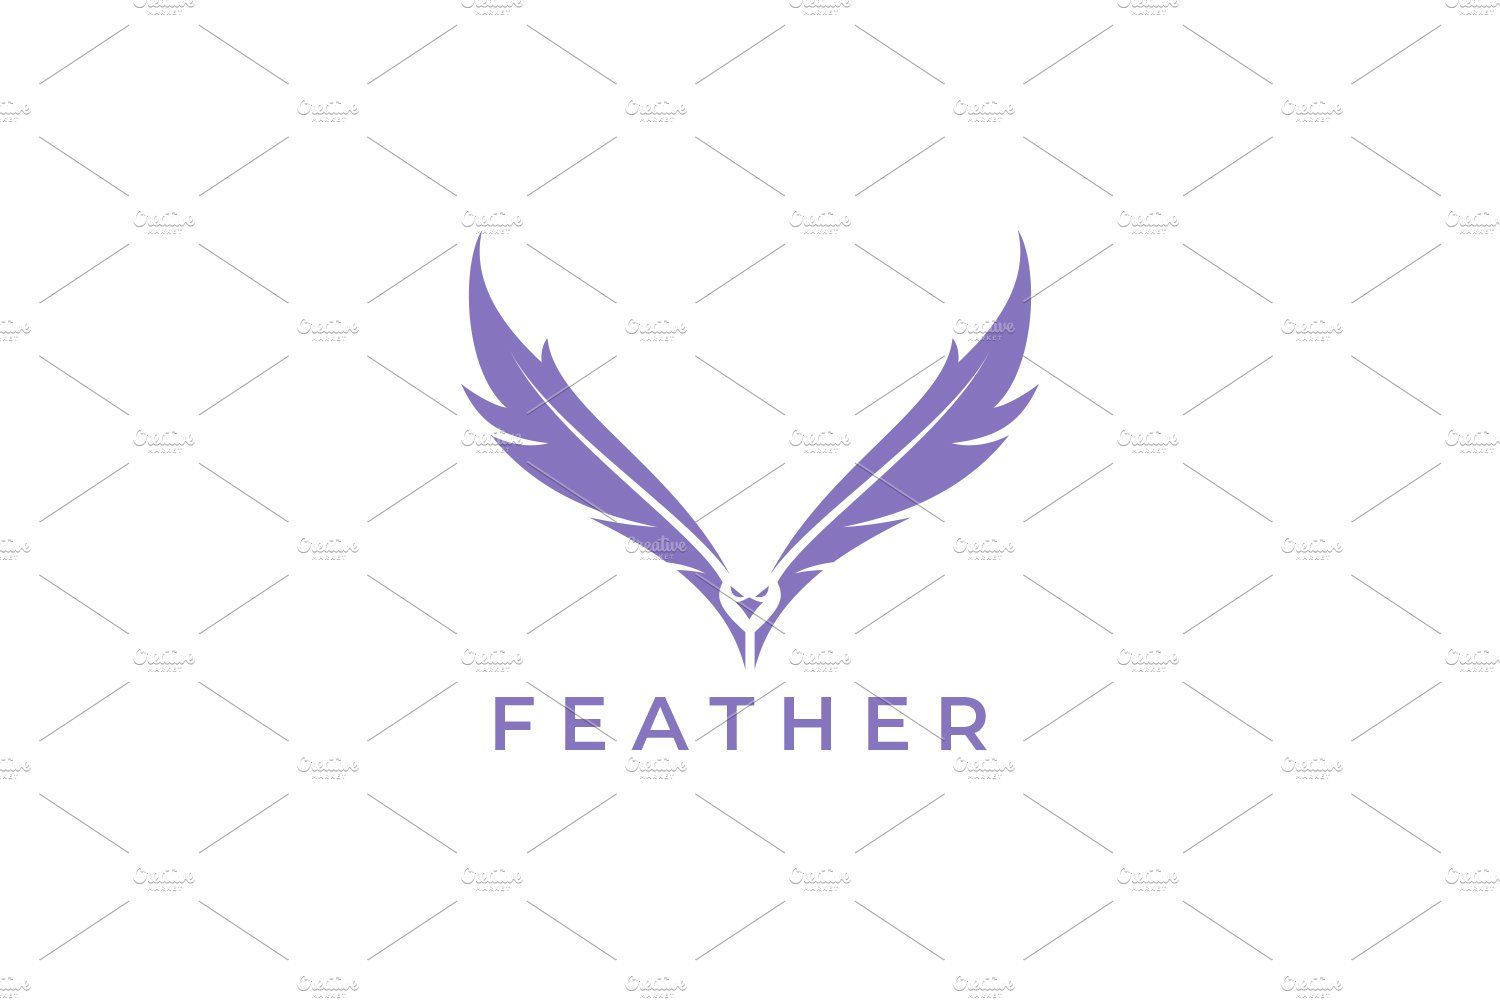 Flying Falcon Logo Design cover image.